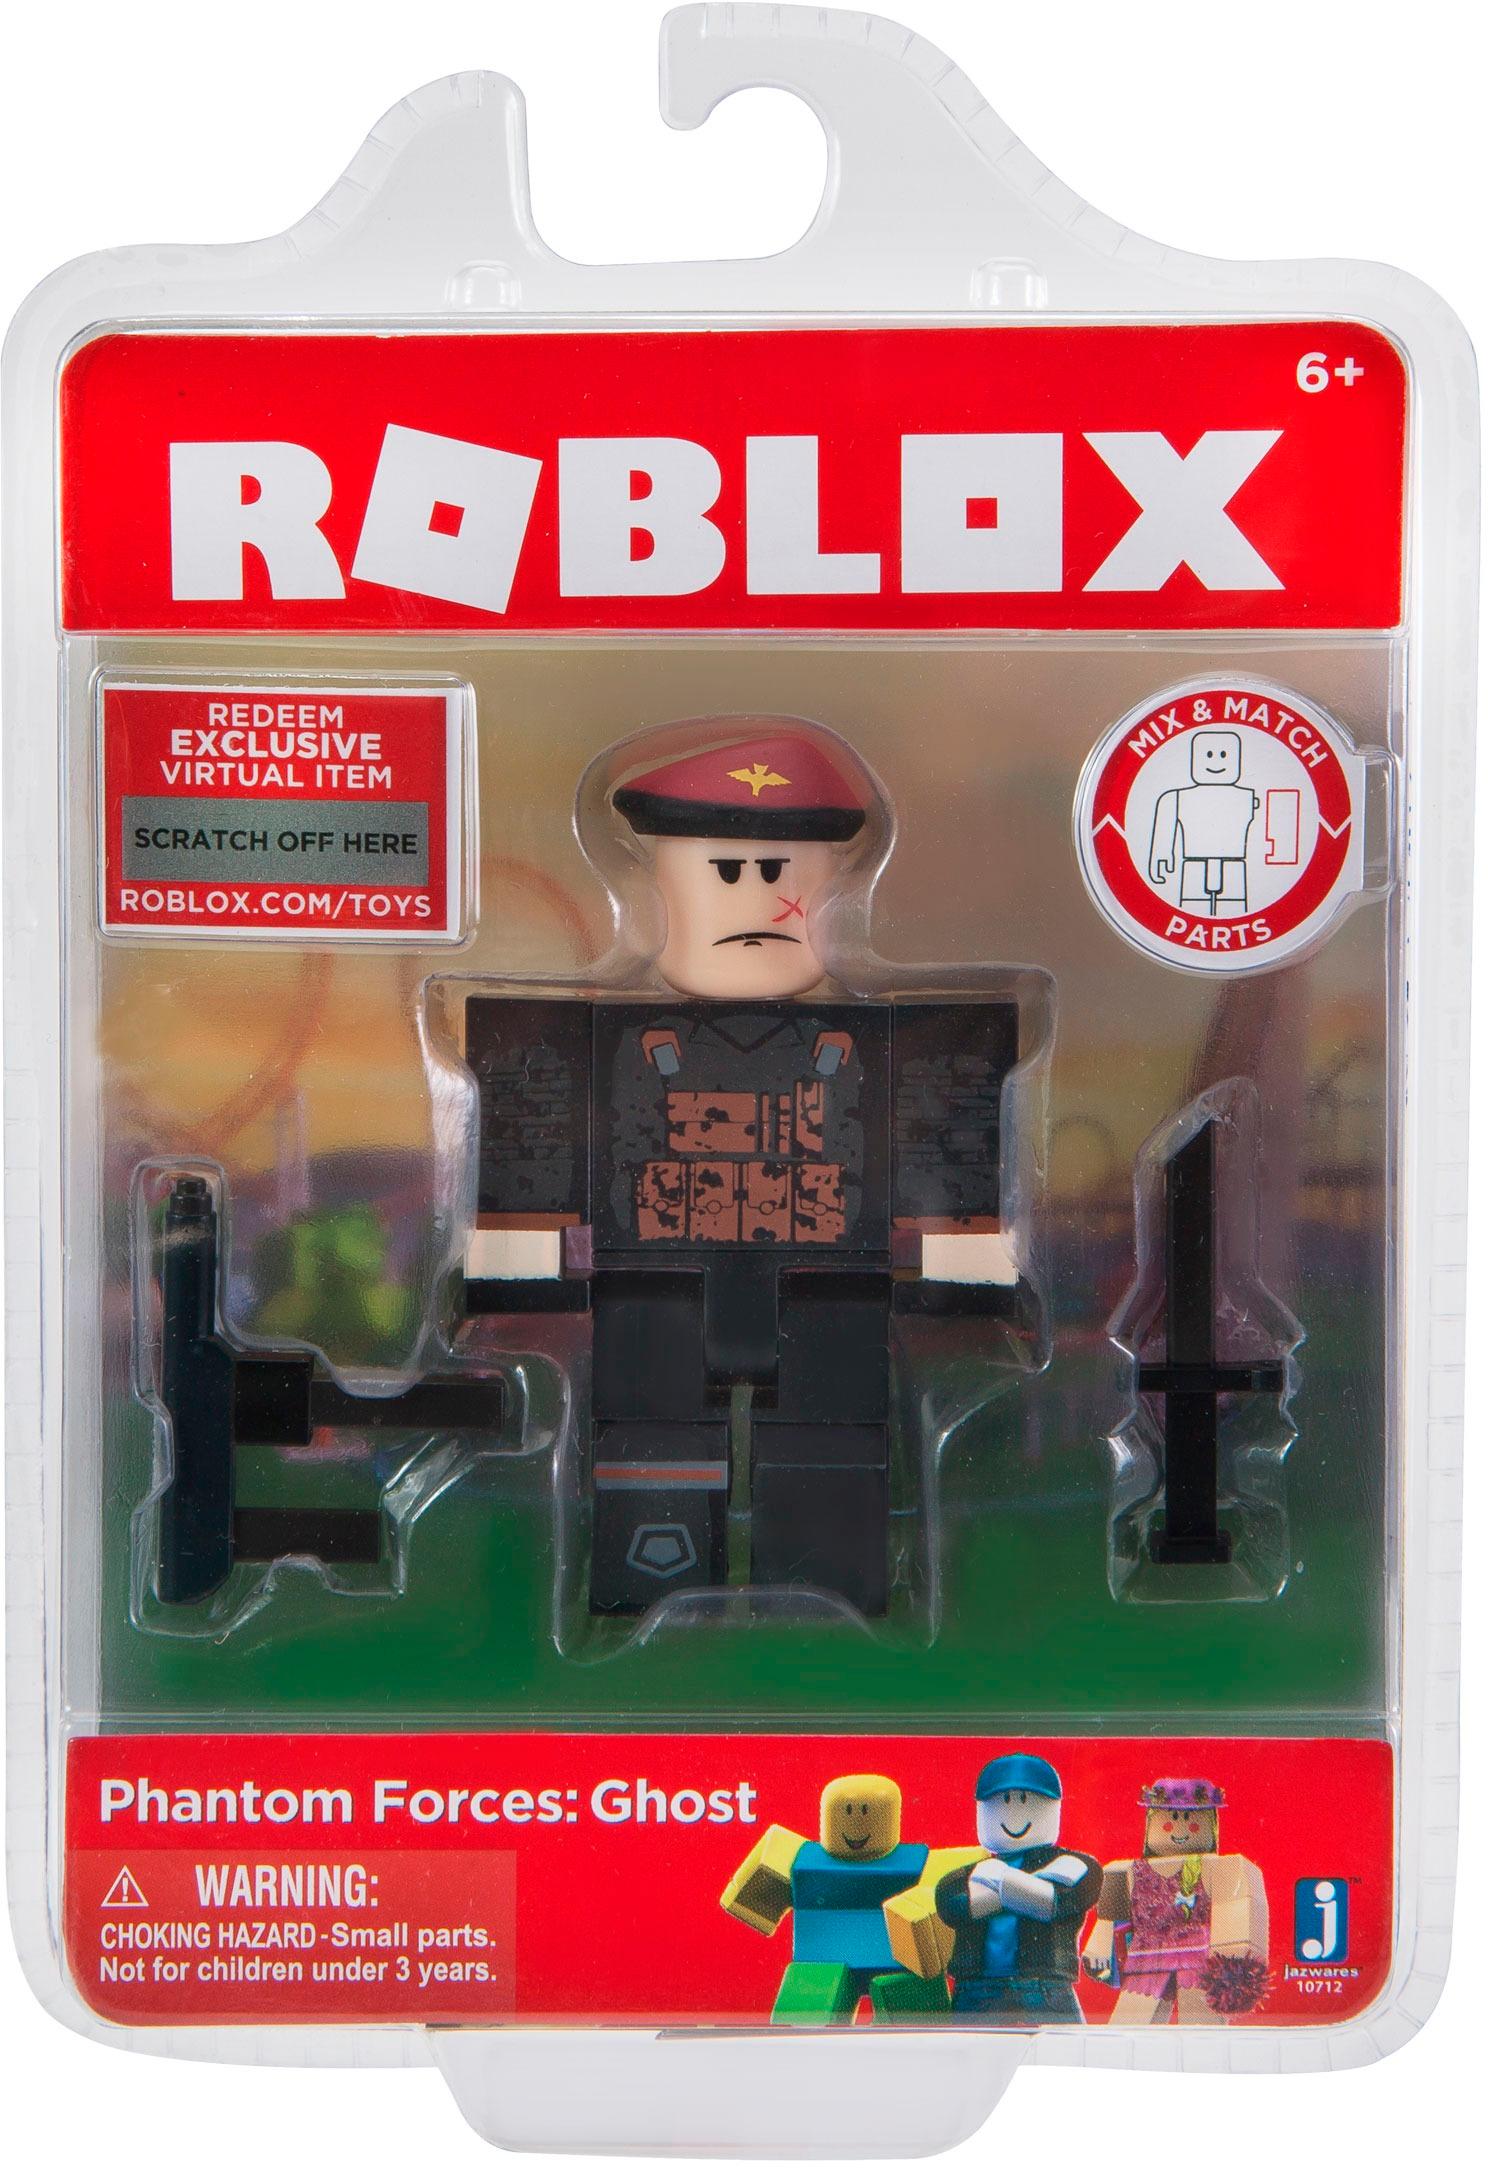 Roblox Core Figure Styles May Vary - jazwares roblox redeem 6 virtual items online code google